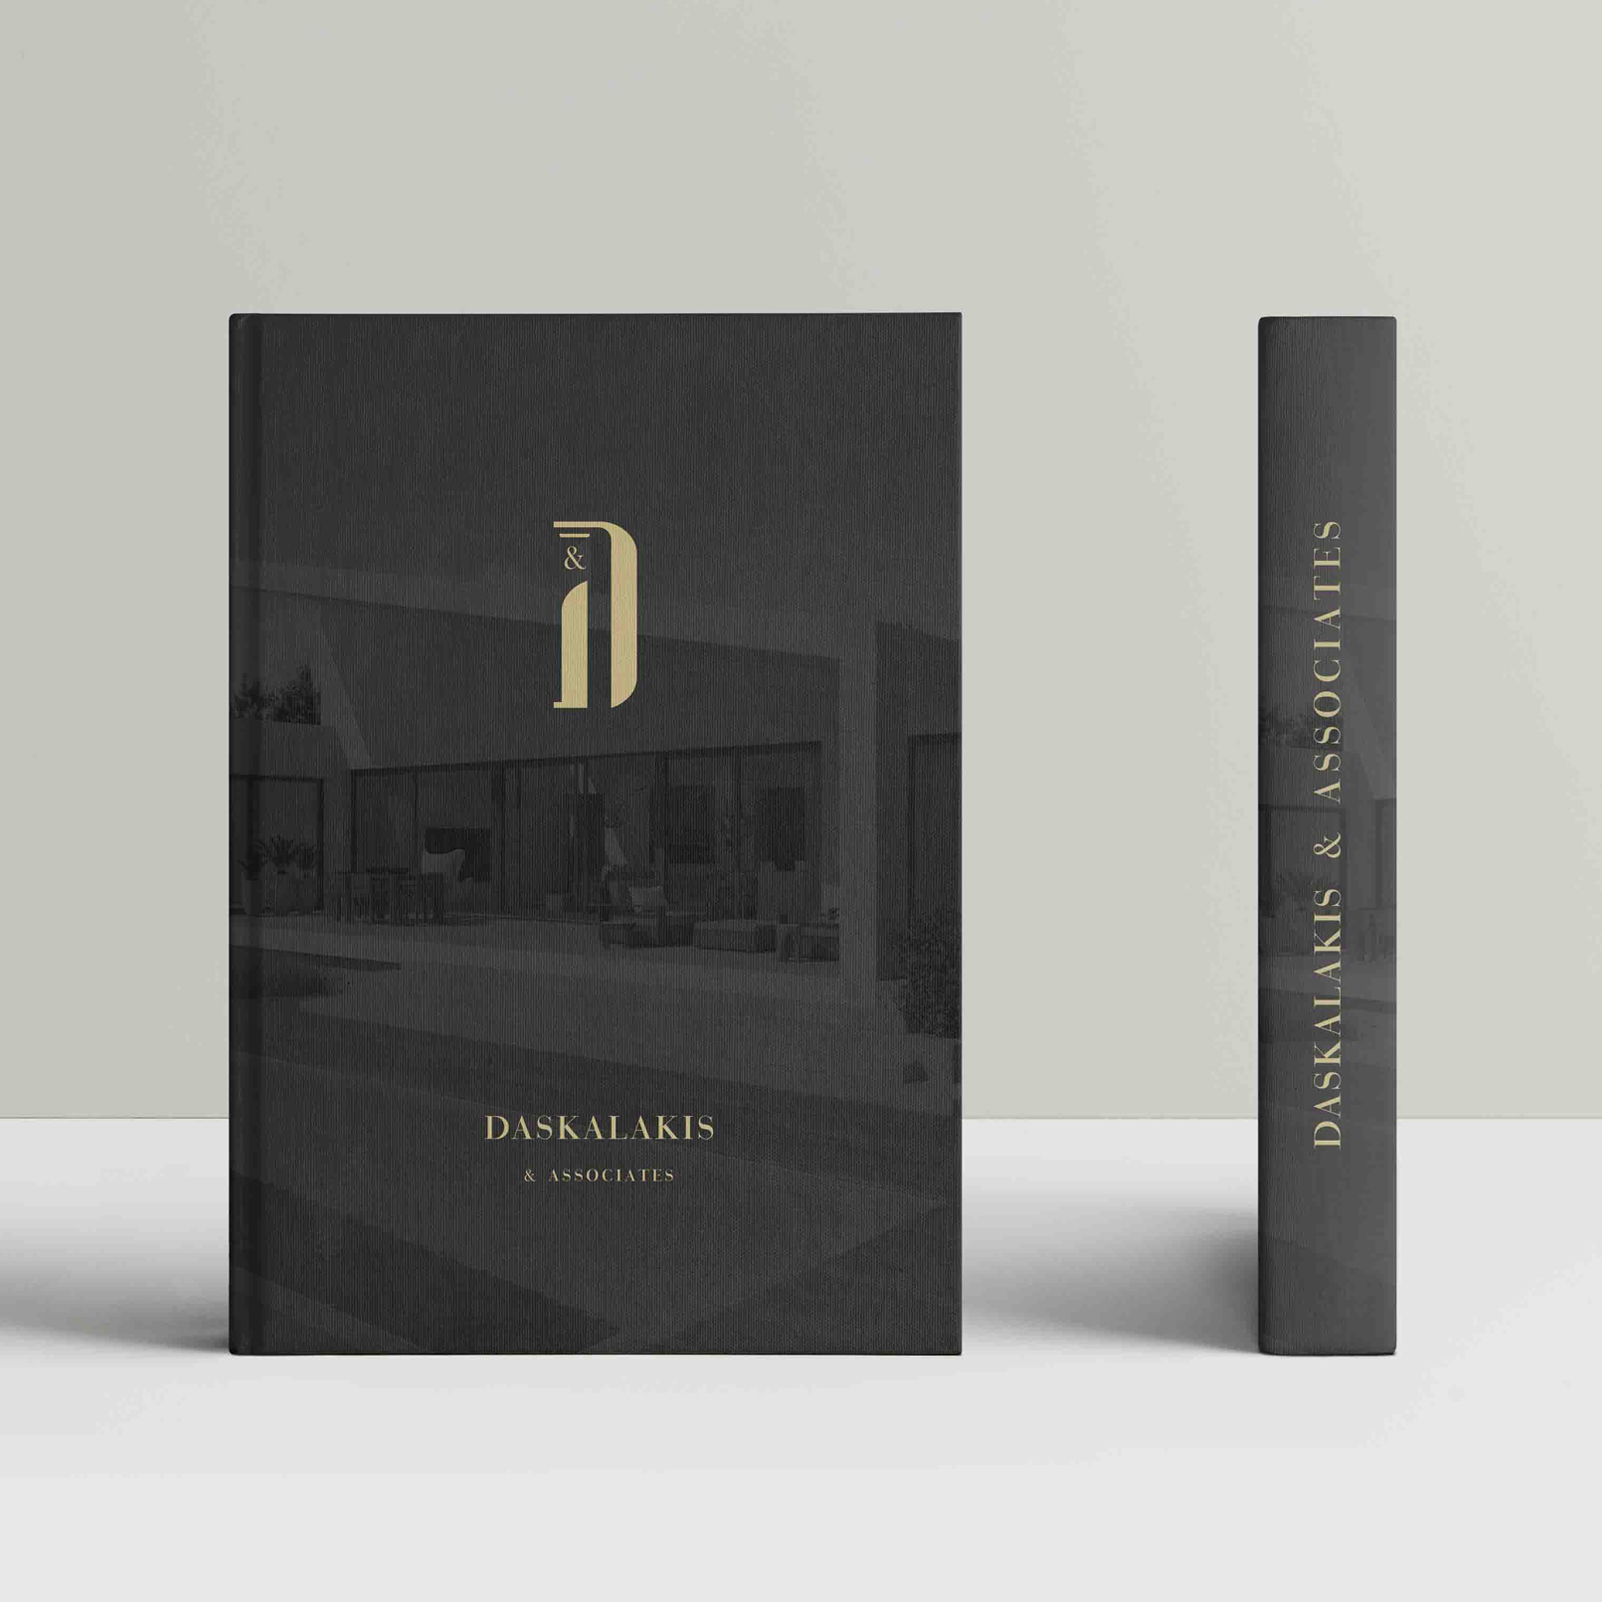 daskalakis 1 - Daskalakis & Associates - The Design Boutique -daskalakis 1